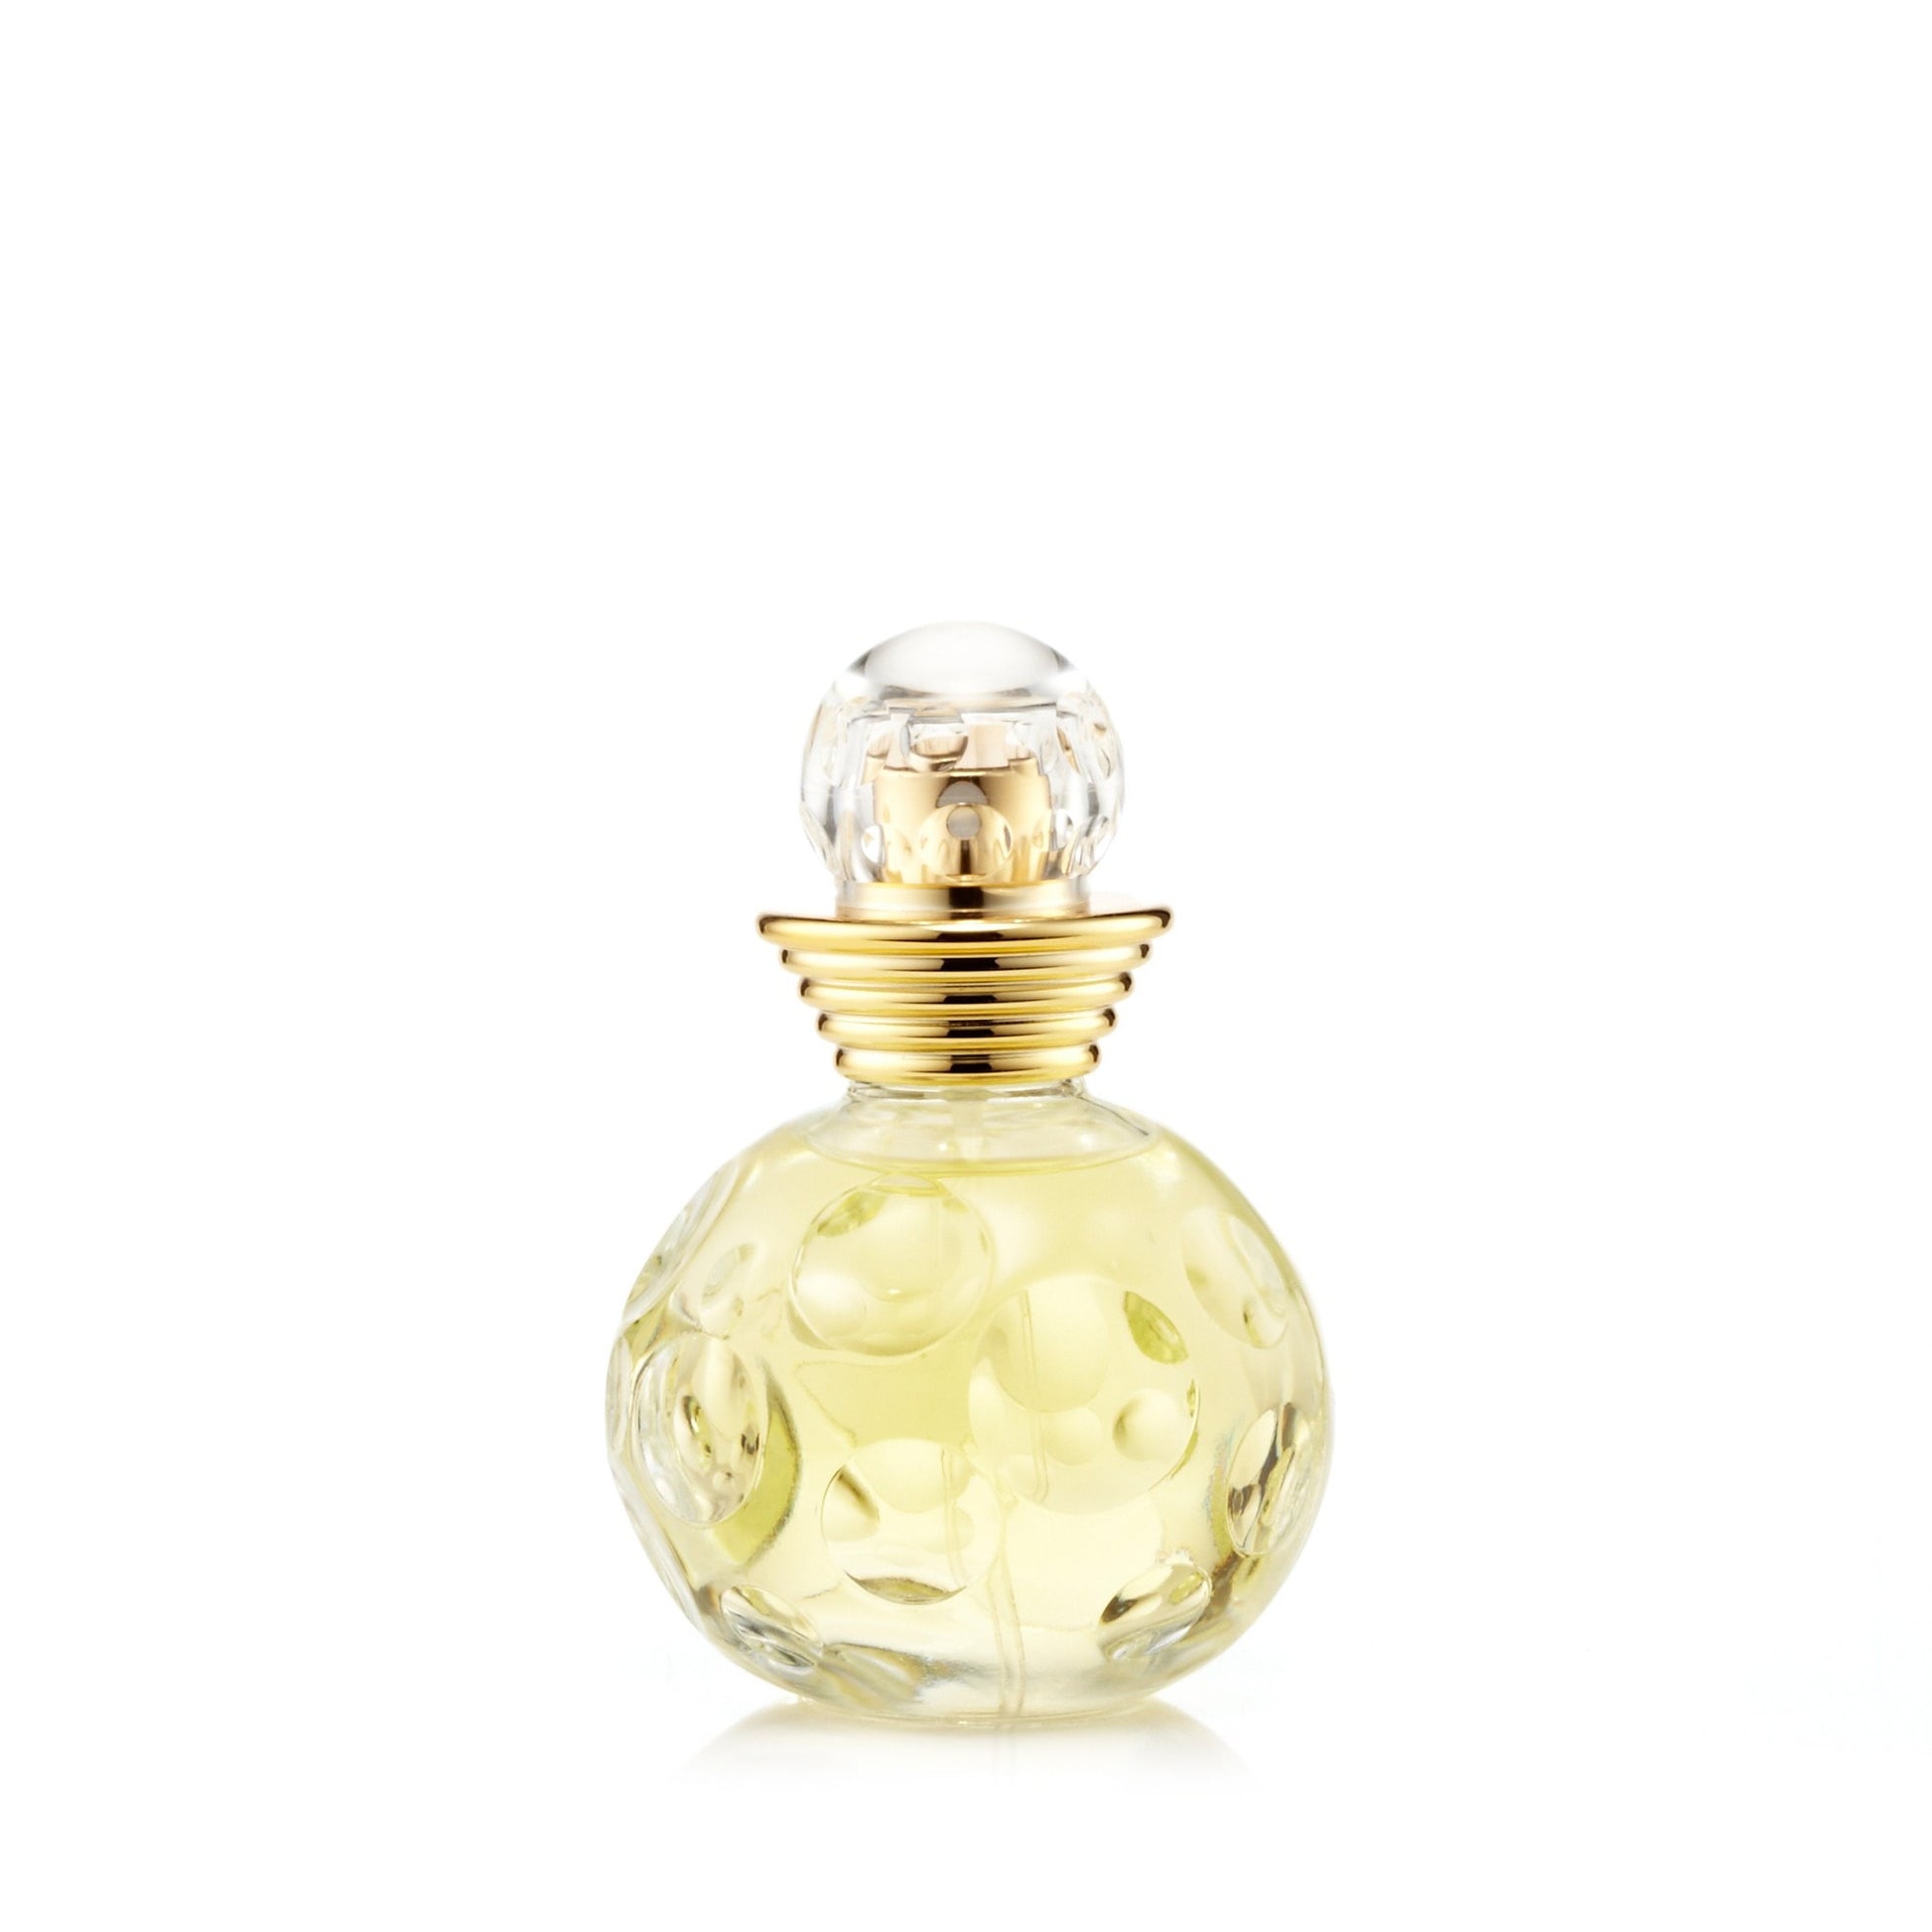 Dolce Vita Eau de Toilette Spray for Women by Dior 1.7 oz. Click to open in modal